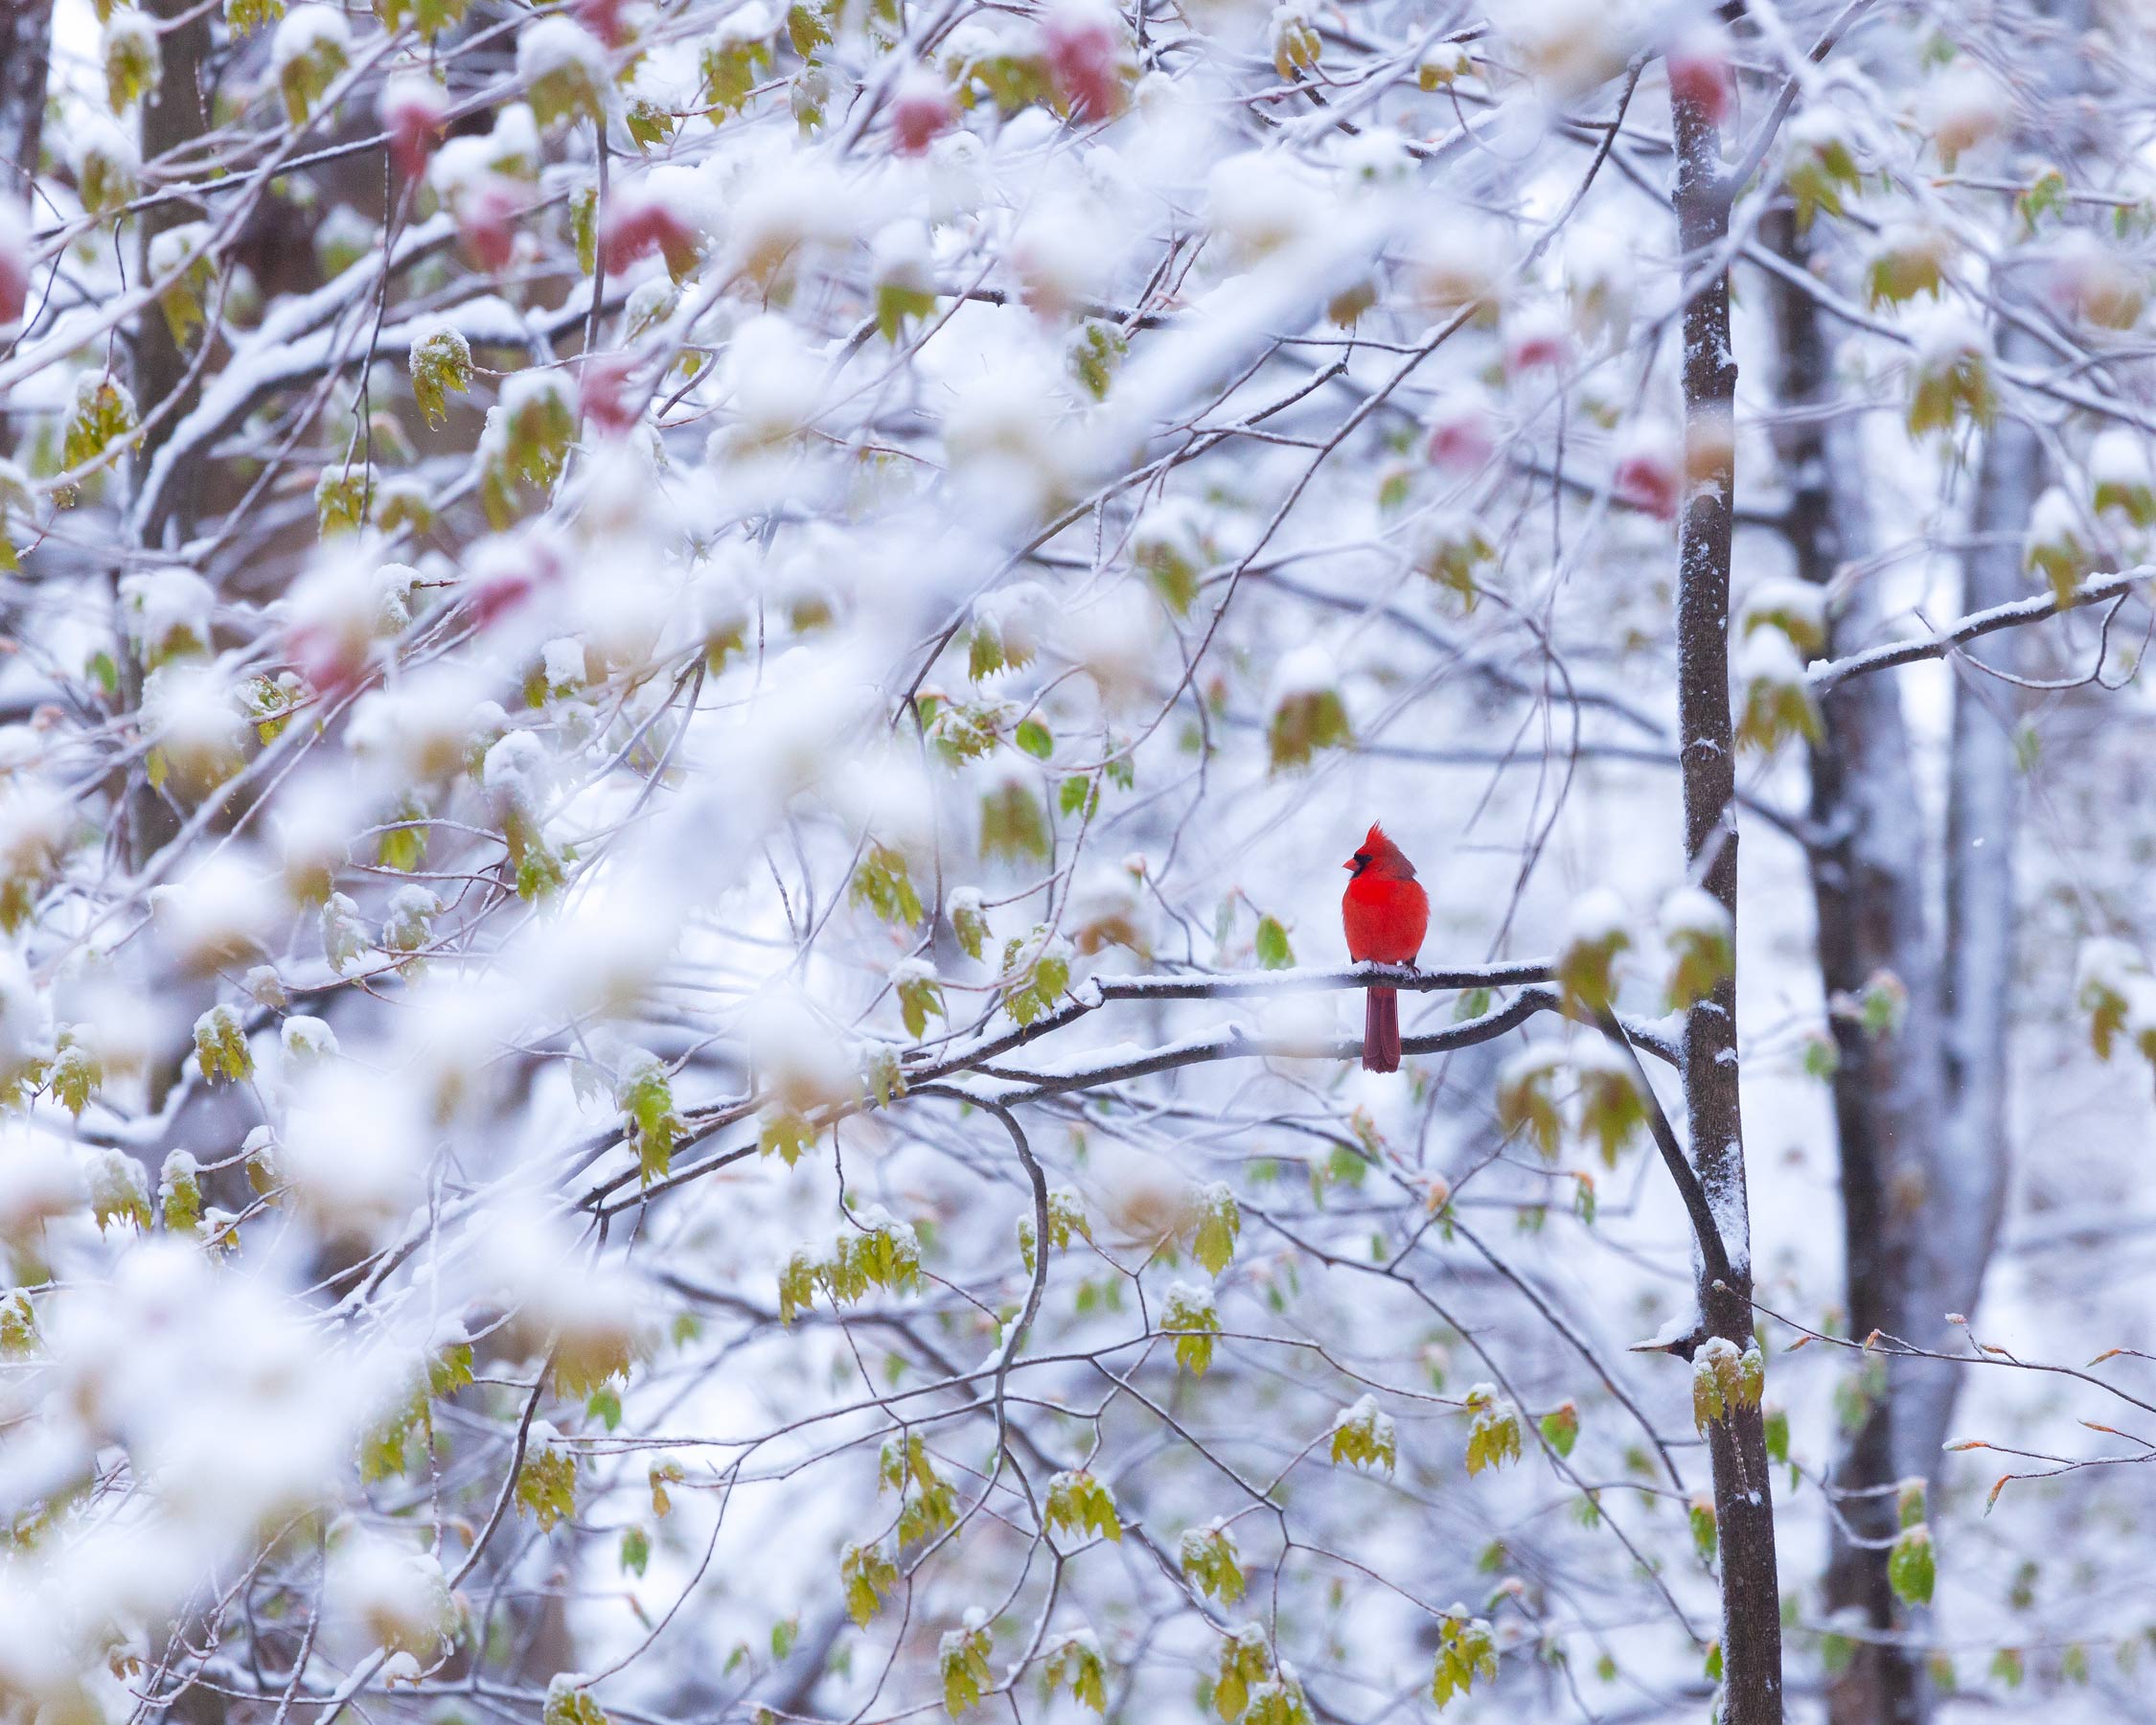 Cardinal-In-Snow-9031-copy